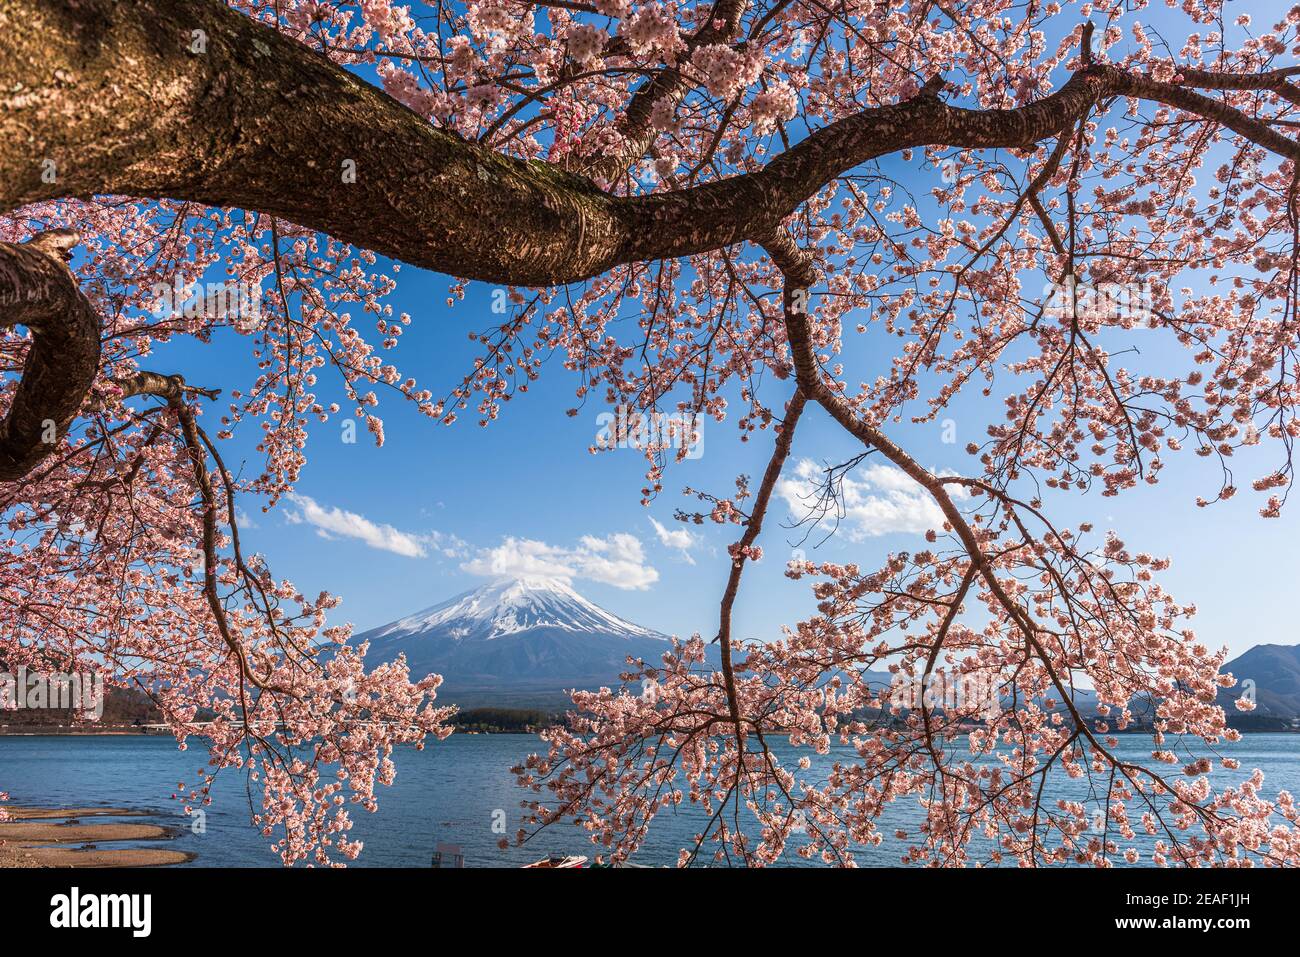 Mt. Fuji, Japan on Lake Kawaguchi during spring season with cherry blossoms. Stock Photo